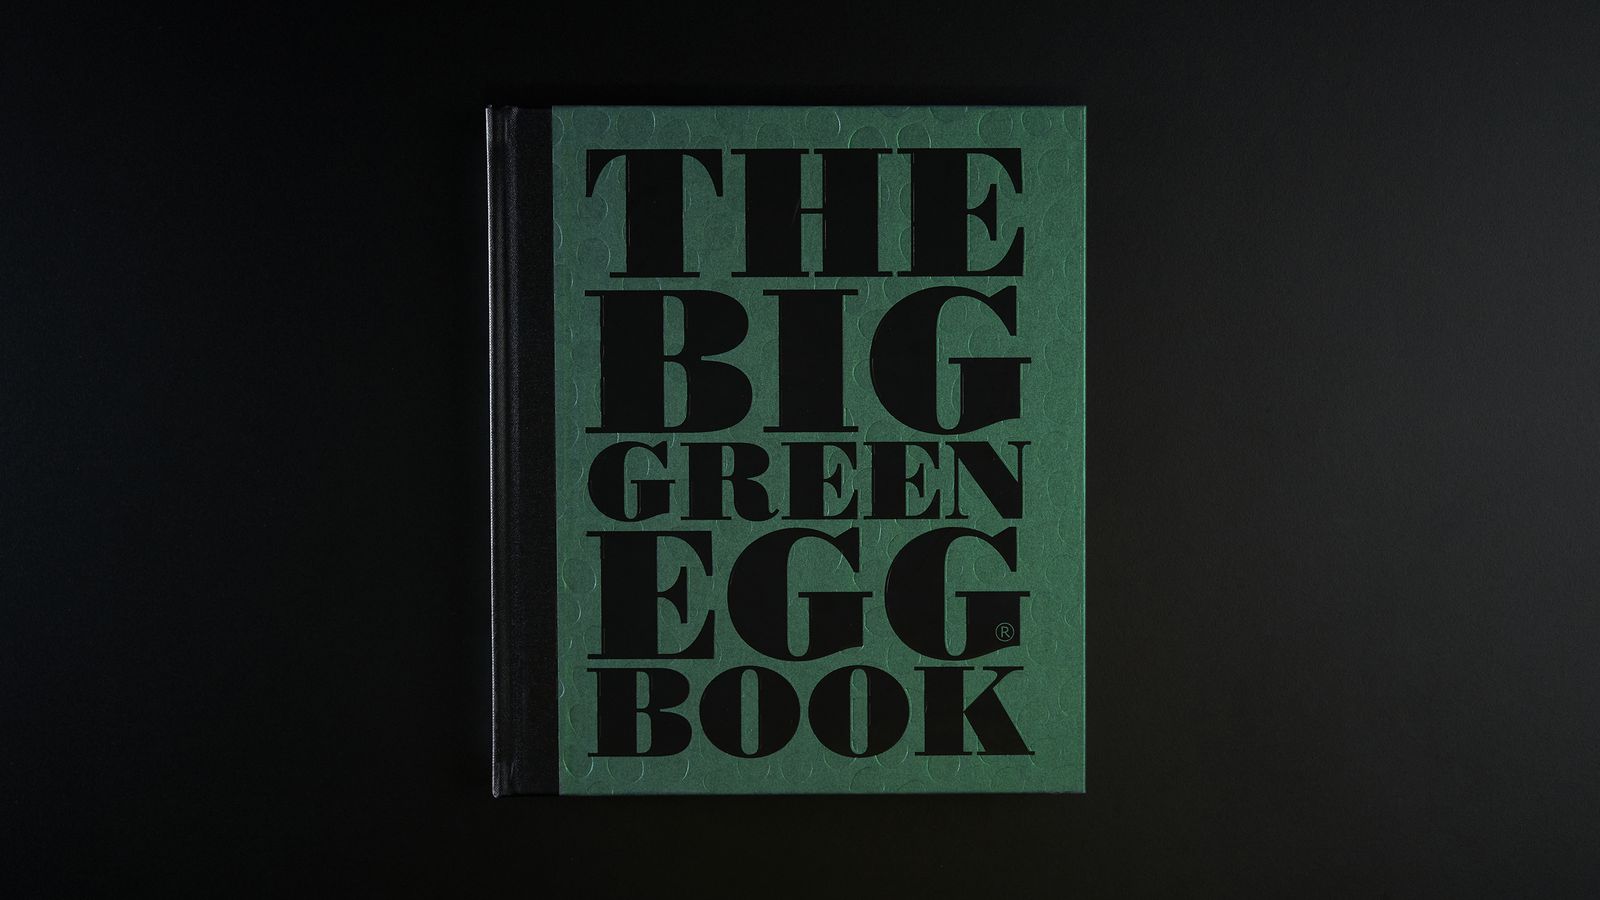 The Big Green Egg book - Cover.jpg